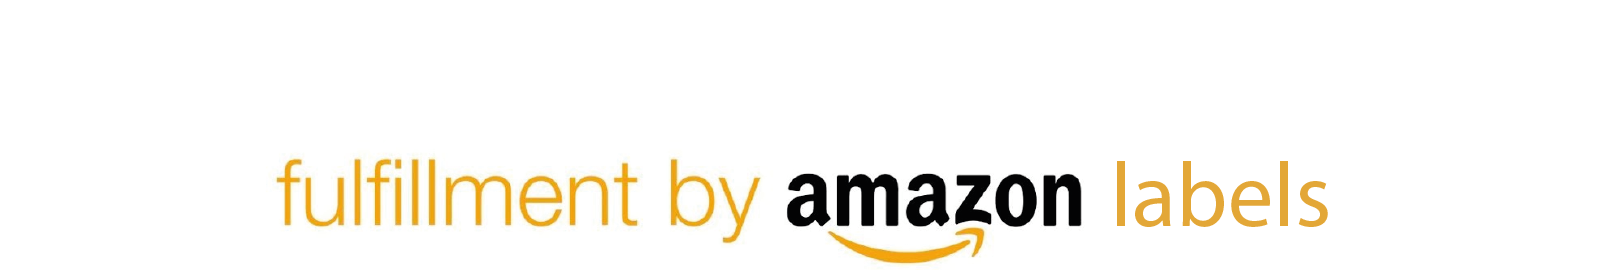 Amazon FBA Labels